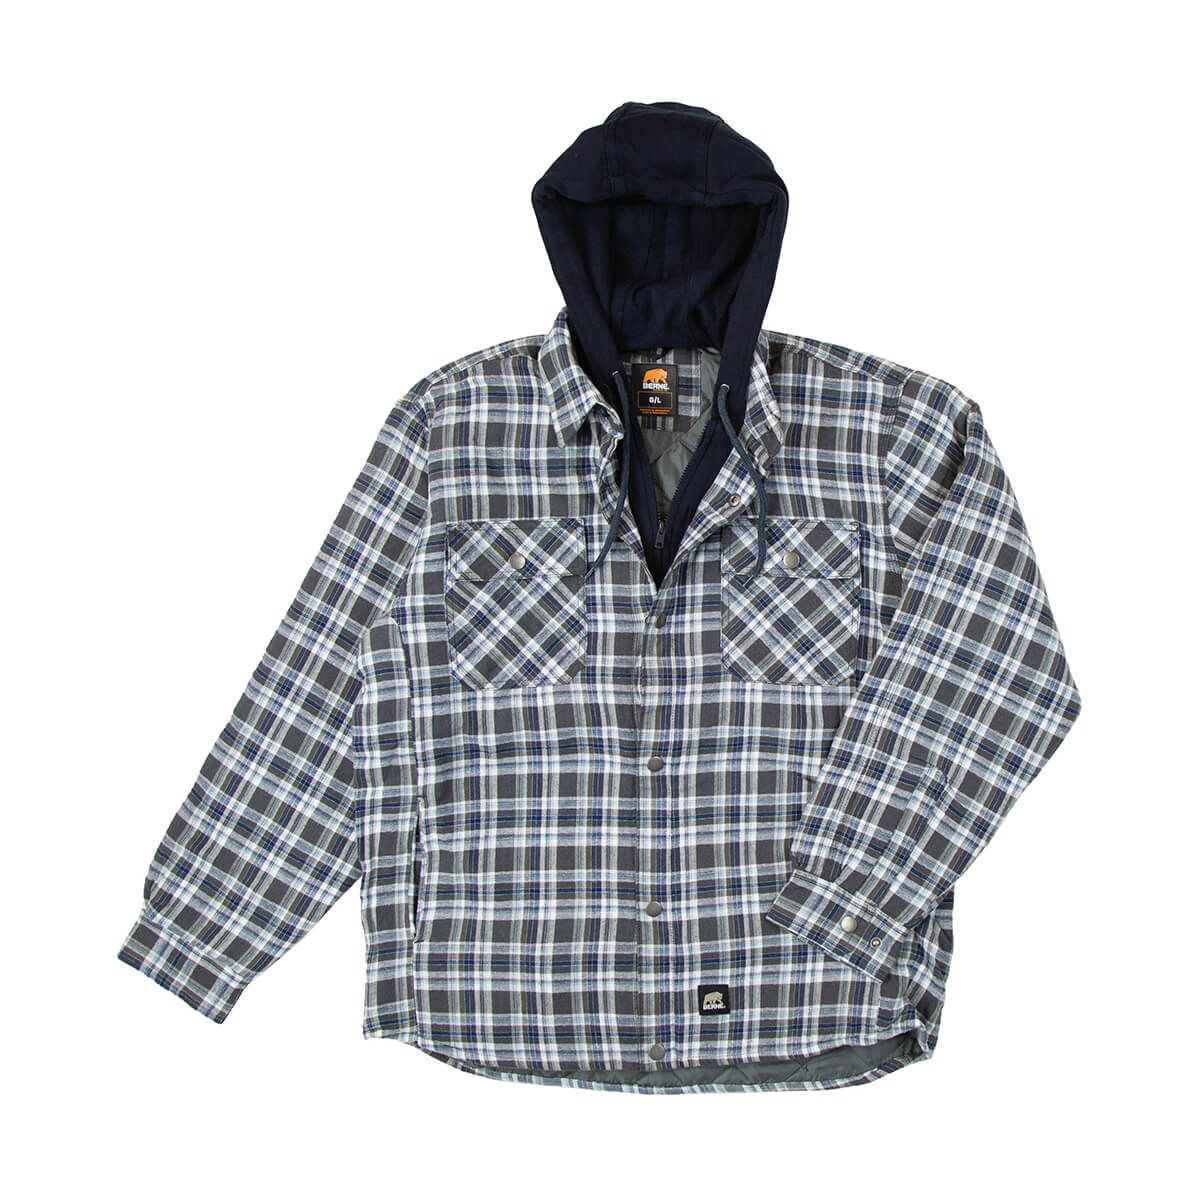 Berne Men's Heartland Hooded Shirt Jacket - Gray/Navy